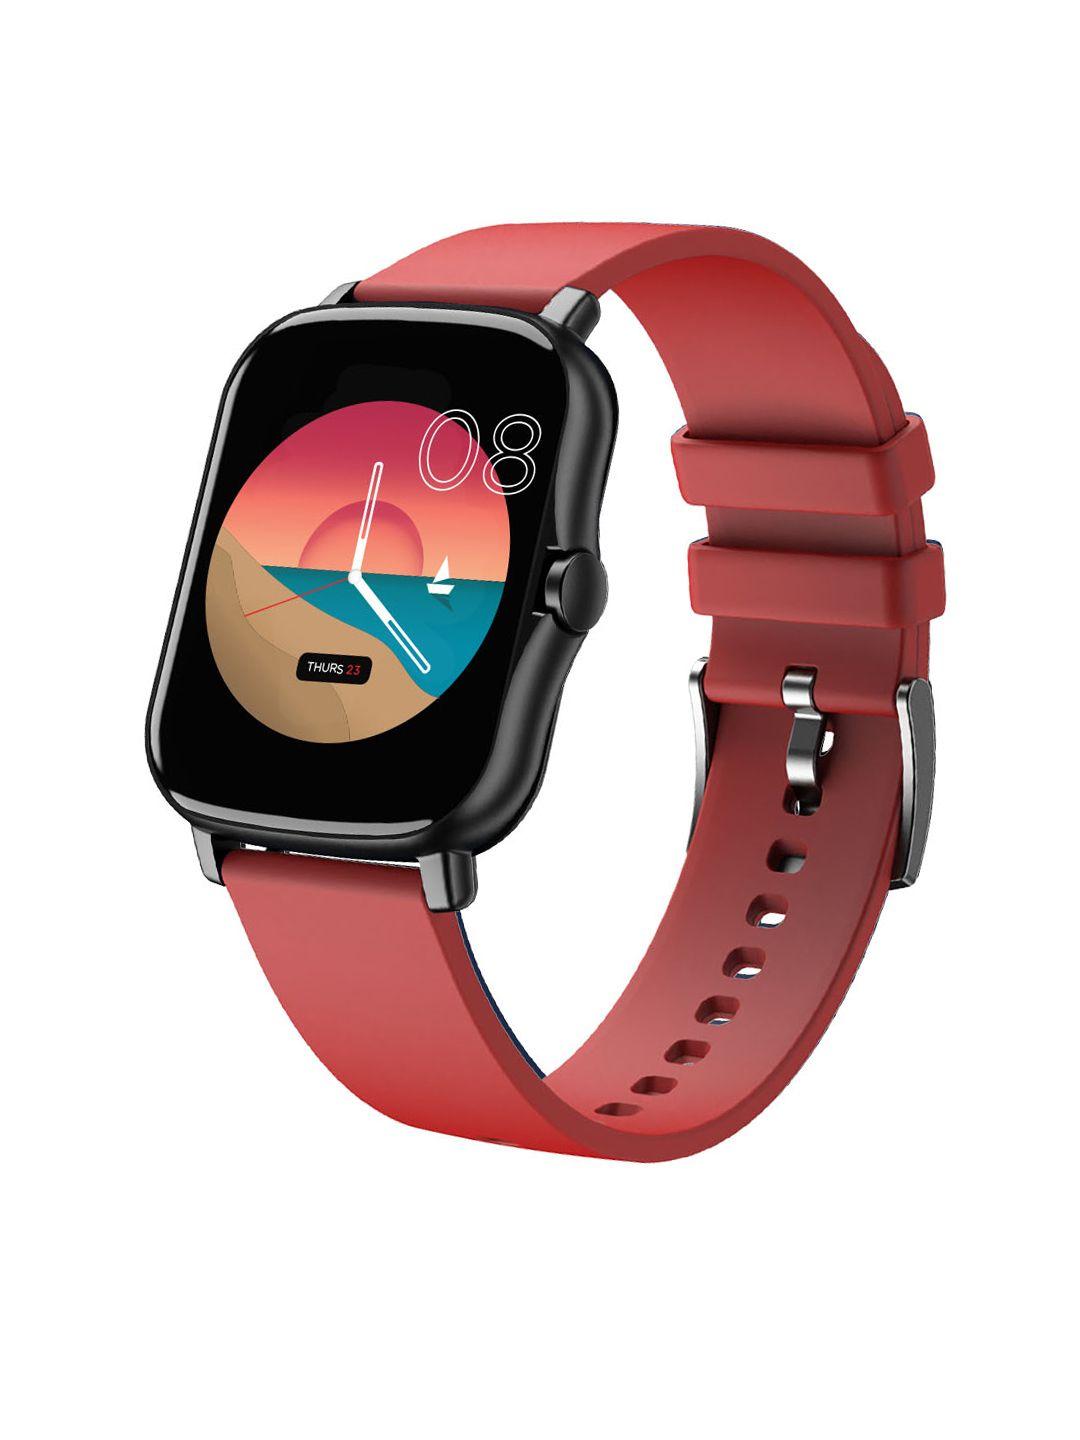 boat vertex m smart watch - raging red